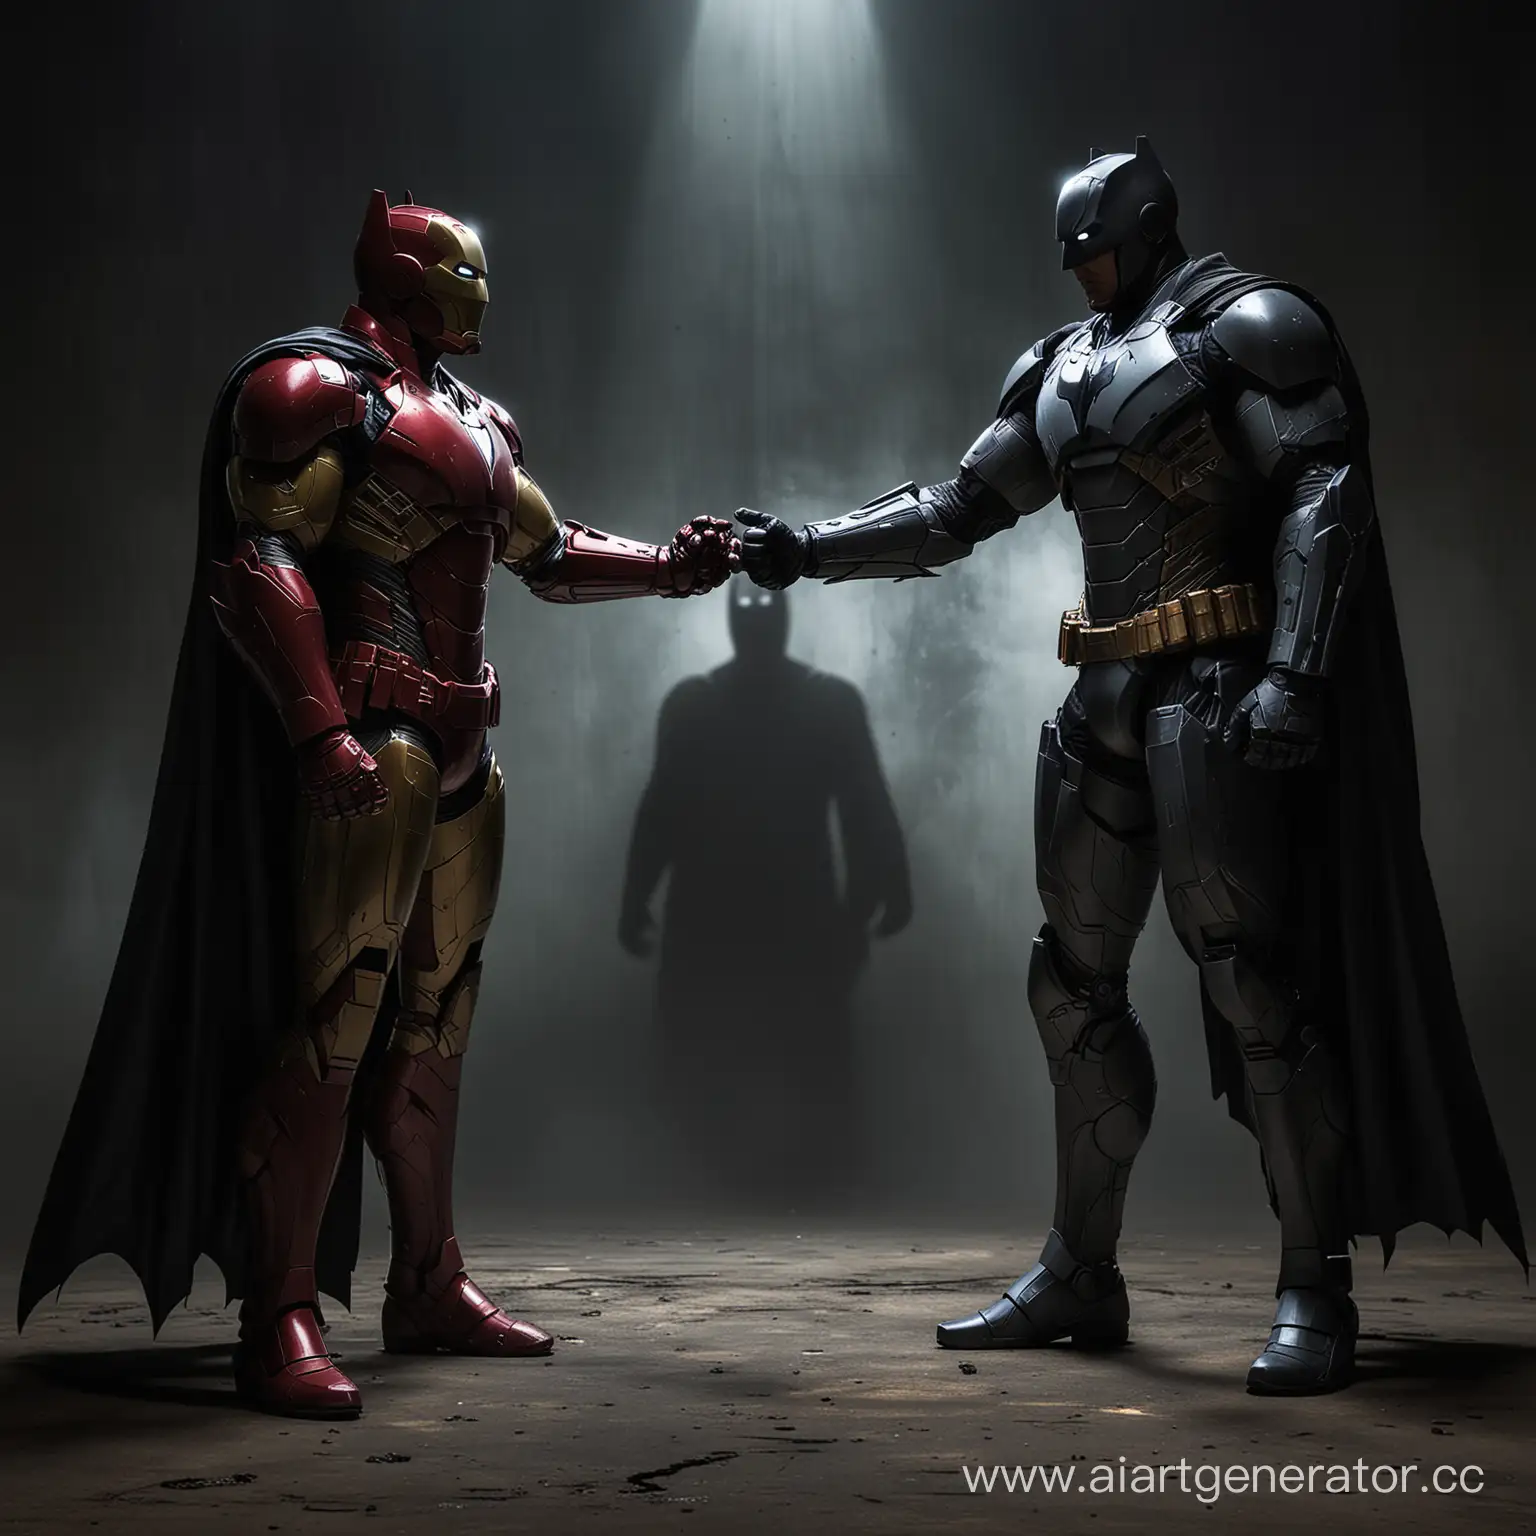 Epic-Showdown-Batman-and-Iron-Man-Face-Off-in-Dim-Light